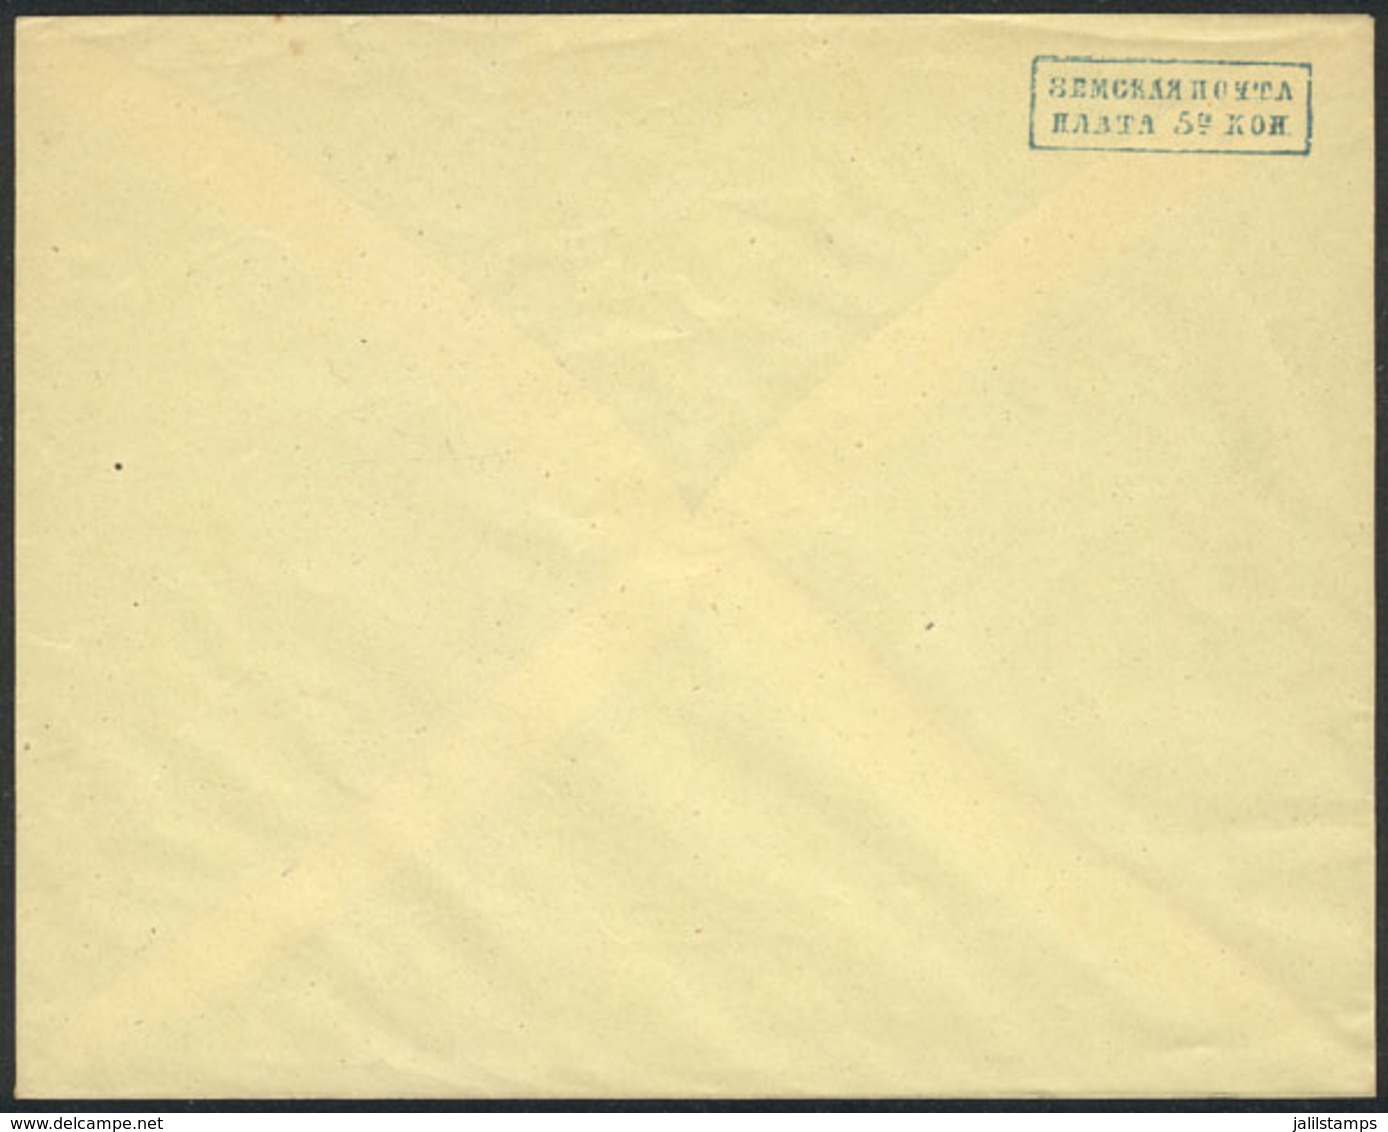 RUSSIA: TULA: 5k. Stationery Envelope, Unused, Very Fine Quality, Rare! - Zemstvos